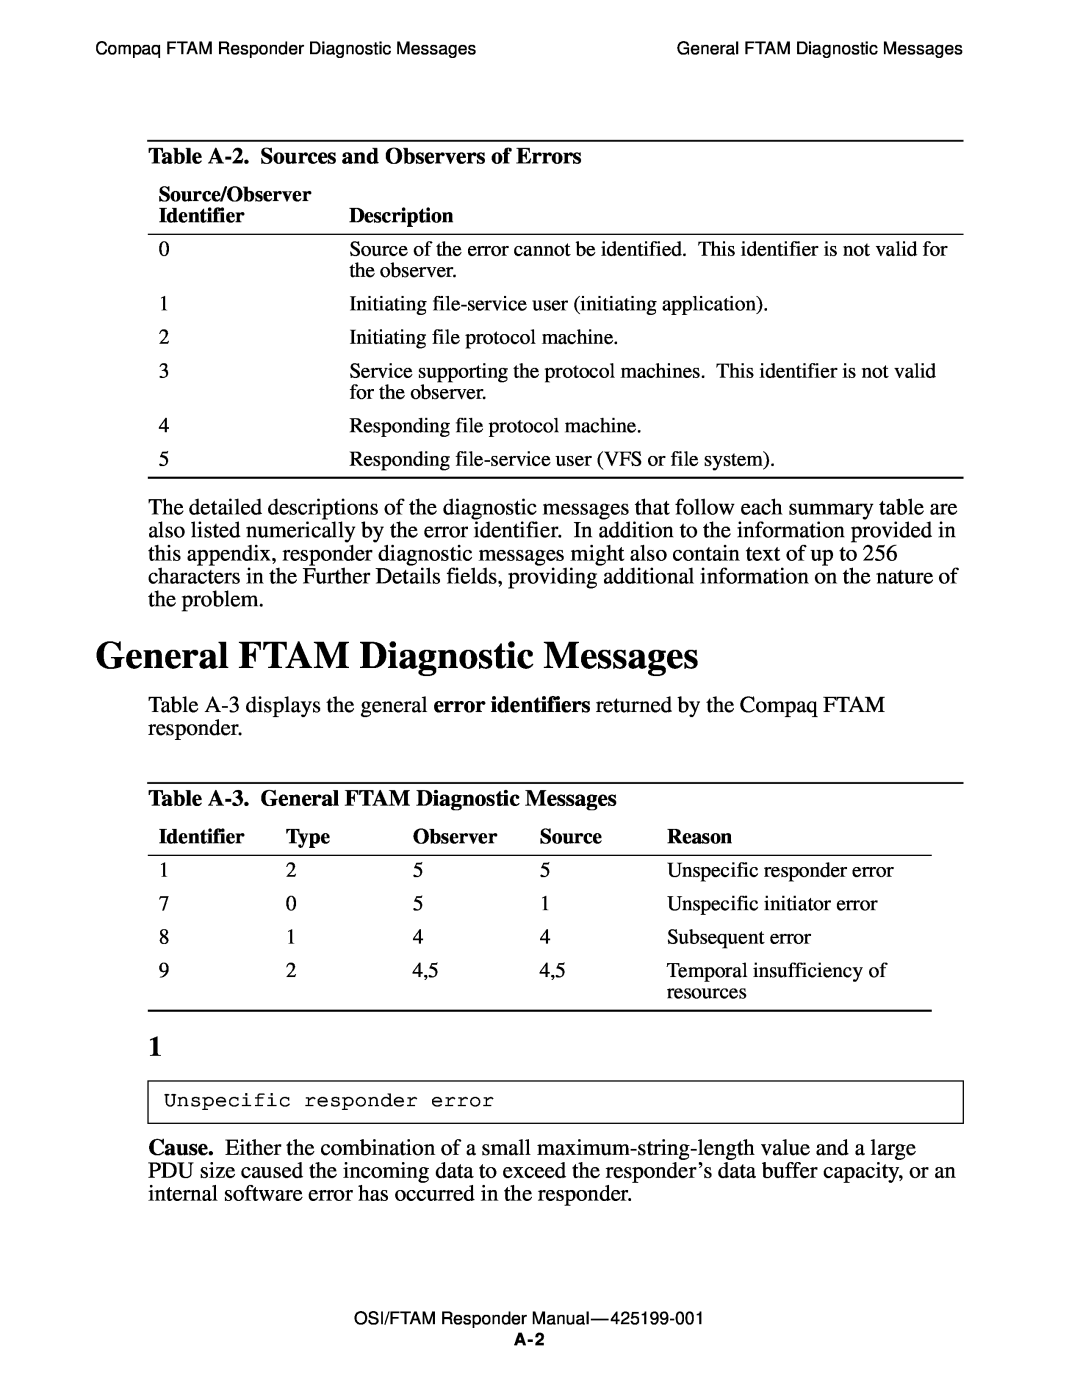 Compaq OSI/APLMGR D43, OSI/FTAM D43 manual General FTAM Diagnostic Messages, Table A-2. Sources and Observers of Errors 